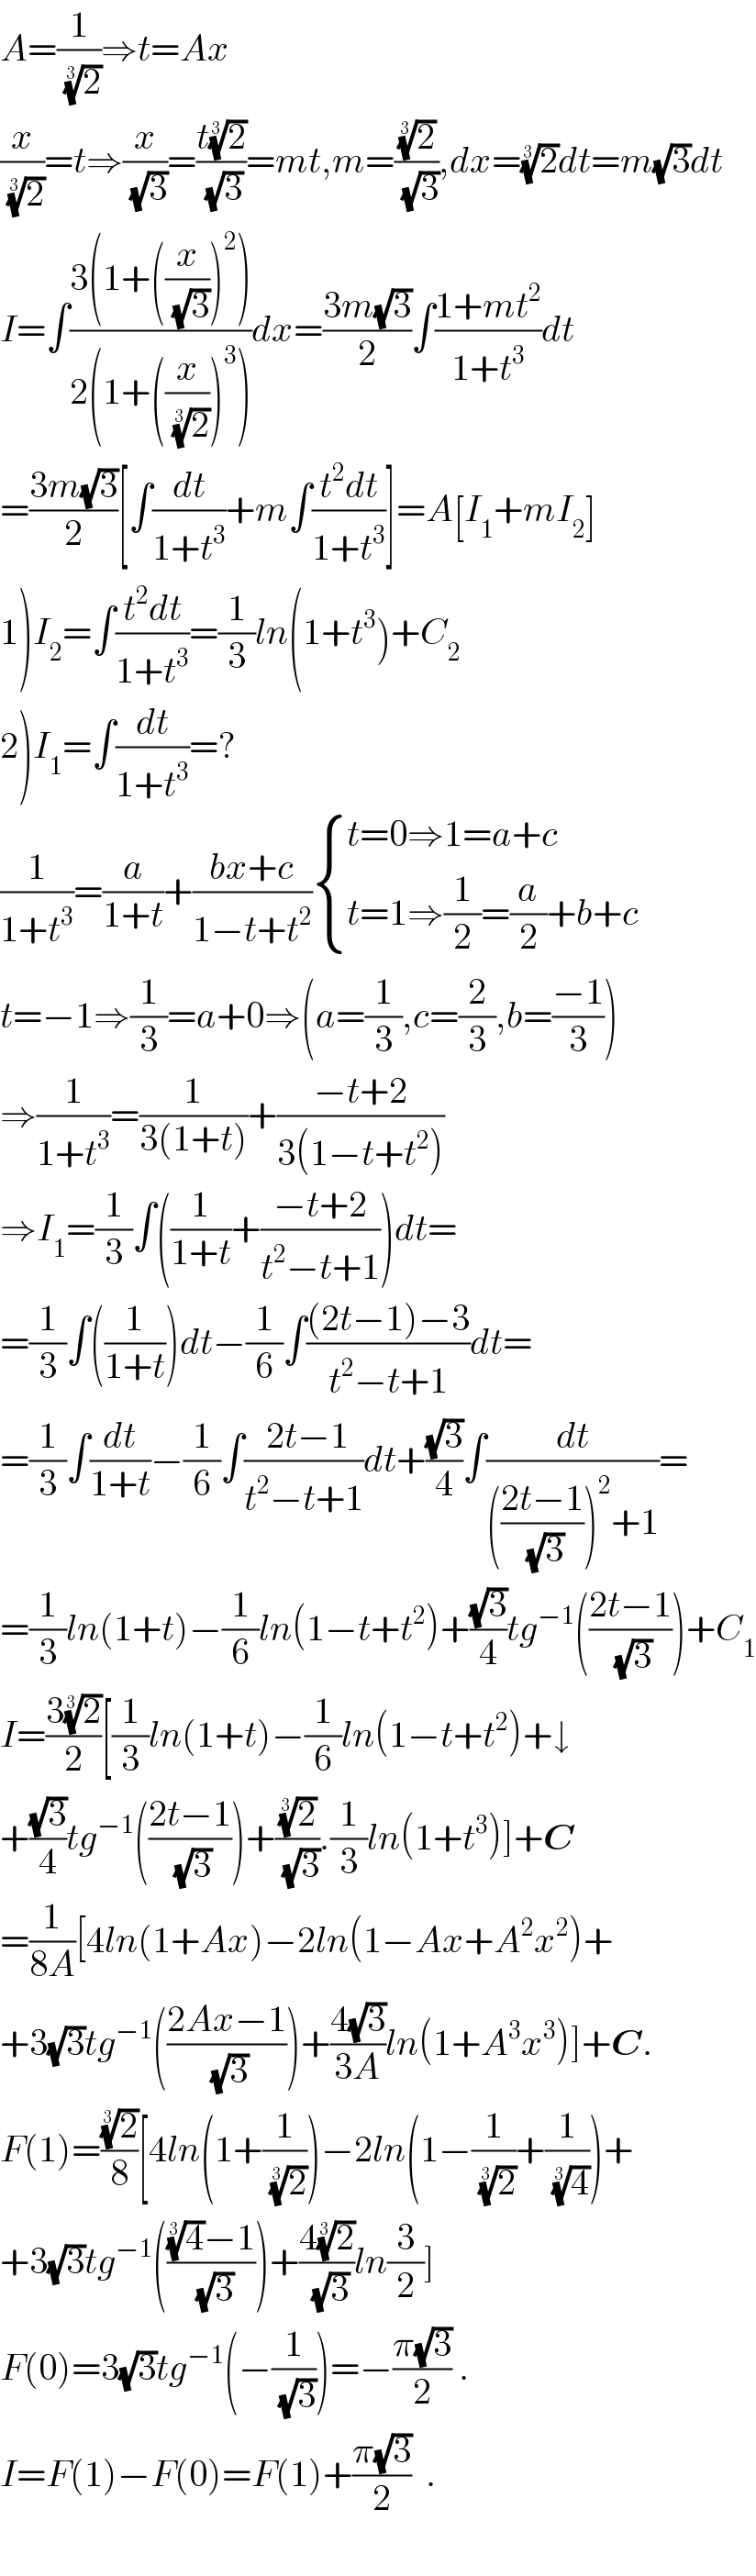 A=(1/(2)^(1/3) )⇒t=Ax  (x/(2)^(1/3) )=t⇒(x/(√3))=((t(2)^(1/3) )/(√3))=mt,m=((2)^(1/3) /(√3)),dx=(2)^(1/3) dt=m(√3)dt  I=∫((3(1+((x/(√3)))^2 ))/(2(1+((x/(2)^(1/3) ))^3 )))dx=((3m(√3))/2)∫((1+mt^2 )/(1+t^3 ))dt  =((3m(√3))/2)[∫(dt/(1+t^3 ))+m∫((t^2 dt)/(1+t^3 ))]=A[I_1 +mI_2 ]  1)I_2 =∫((t^2 dt)/(1+t^3 ))=(1/3)ln(1+t^3 )+C_2   2)I_1 =∫(dt/(1+t^3 ))=?  (1/(1+t^3 ))=(a/(1+t))+((bx+c)/(1−t+t^2 )) { ((t=0⇒1=a+c)),((t=1⇒(1/2)=(a/2)+b+c)) :}  t=−1⇒(1/3)=a+0⇒(a=(1/3),c=(2/3),b=((−1)/3))  ⇒(1/(1+t^3 ))=(1/(3(1+t)))+((−t+2)/(3(1−t+t^2 )))  ⇒I_1 =(1/3)∫((1/(1+t))+((−t+2)/(t^2 −t+1)))dt=  =(1/3)∫((1/(1+t)))dt−(1/6)∫(((2t−1)−3)/(t^2 −t+1))dt=  =(1/3)∫(dt/(1+t))−(1/6)∫(( 2t−1)/(t^2 −t+1))dt+((√3)/4)∫(dt/((((2t−1)/(√3)))^2 +1))=  =(1/3)ln(1+t)−(1/6)ln(1−t+t^2 )+((√3)/4)tg^(−1) (((2t−1)/(√3)))+C_1   I=((3(2)^(1/3) )/2)[(1/3)ln(1+t)−(1/6)ln(1−t+t^2 )+↓  +((√3)/4)tg^(−1) (((2t−1)/(√3)))+((2)^(1/3) /(√3)).(1/3)ln(1+t^3 )]+C  =(1/(8A))[4ln(1+Ax)−2ln(1−Ax+A^2 x^2 )+  +3(√3)tg^(−1) (((2Ax−1)/(√3)))+((4(√3))/(3A))ln(1+A^3 x^3 )]+C.  F(1)=((2)^(1/3) /8)[4ln(1+(1/(2)^(1/3) ))−2ln(1−(1/(2)^(1/3) )+(1/(4)^(1/3) ))+  +3(√3)tg^(−1) ((((4)^(1/3) −1)/(√3)))+((4(2)^(1/3) )/(√3))ln(3/2)]  F(0)=3(√3)tg^(−1) (−(1/(√3)))=−((π(√3))/2) .  I=F(1)−F(0)=F(1)+((π(√3))/2)  .    